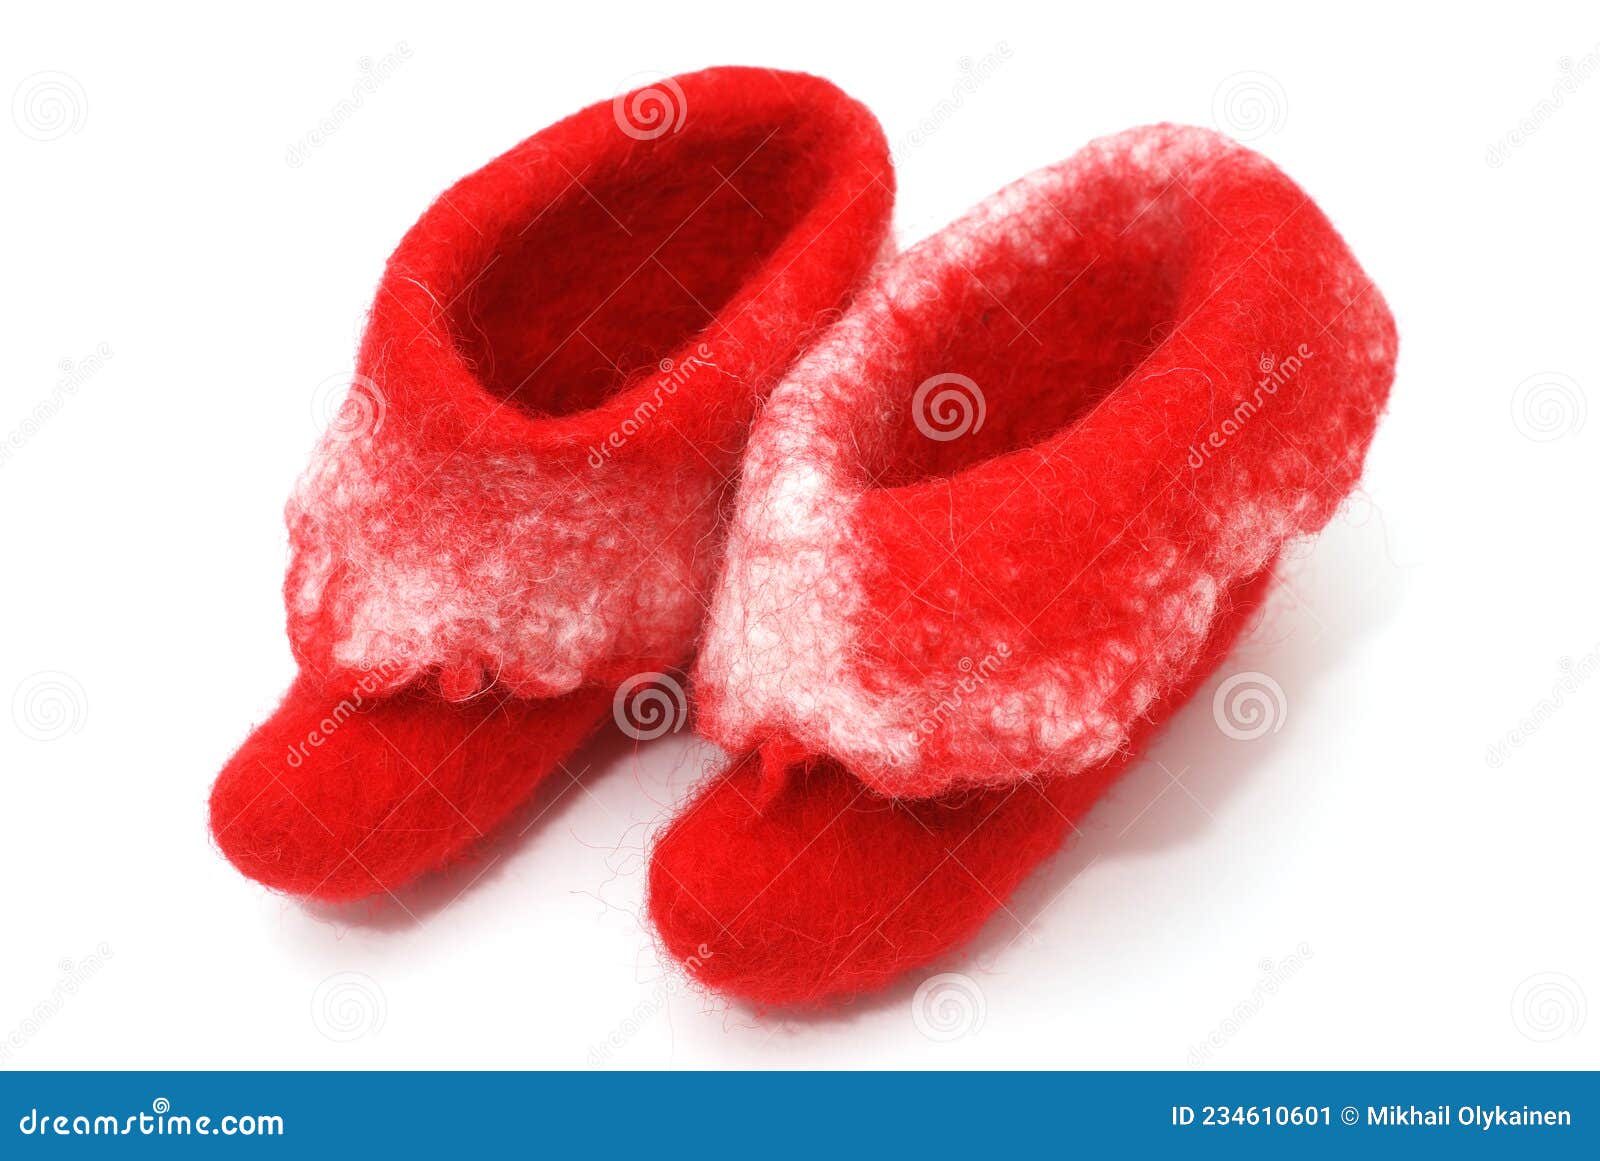 Red Santa boots stock image. Image of gift, santa, felt - 234610601